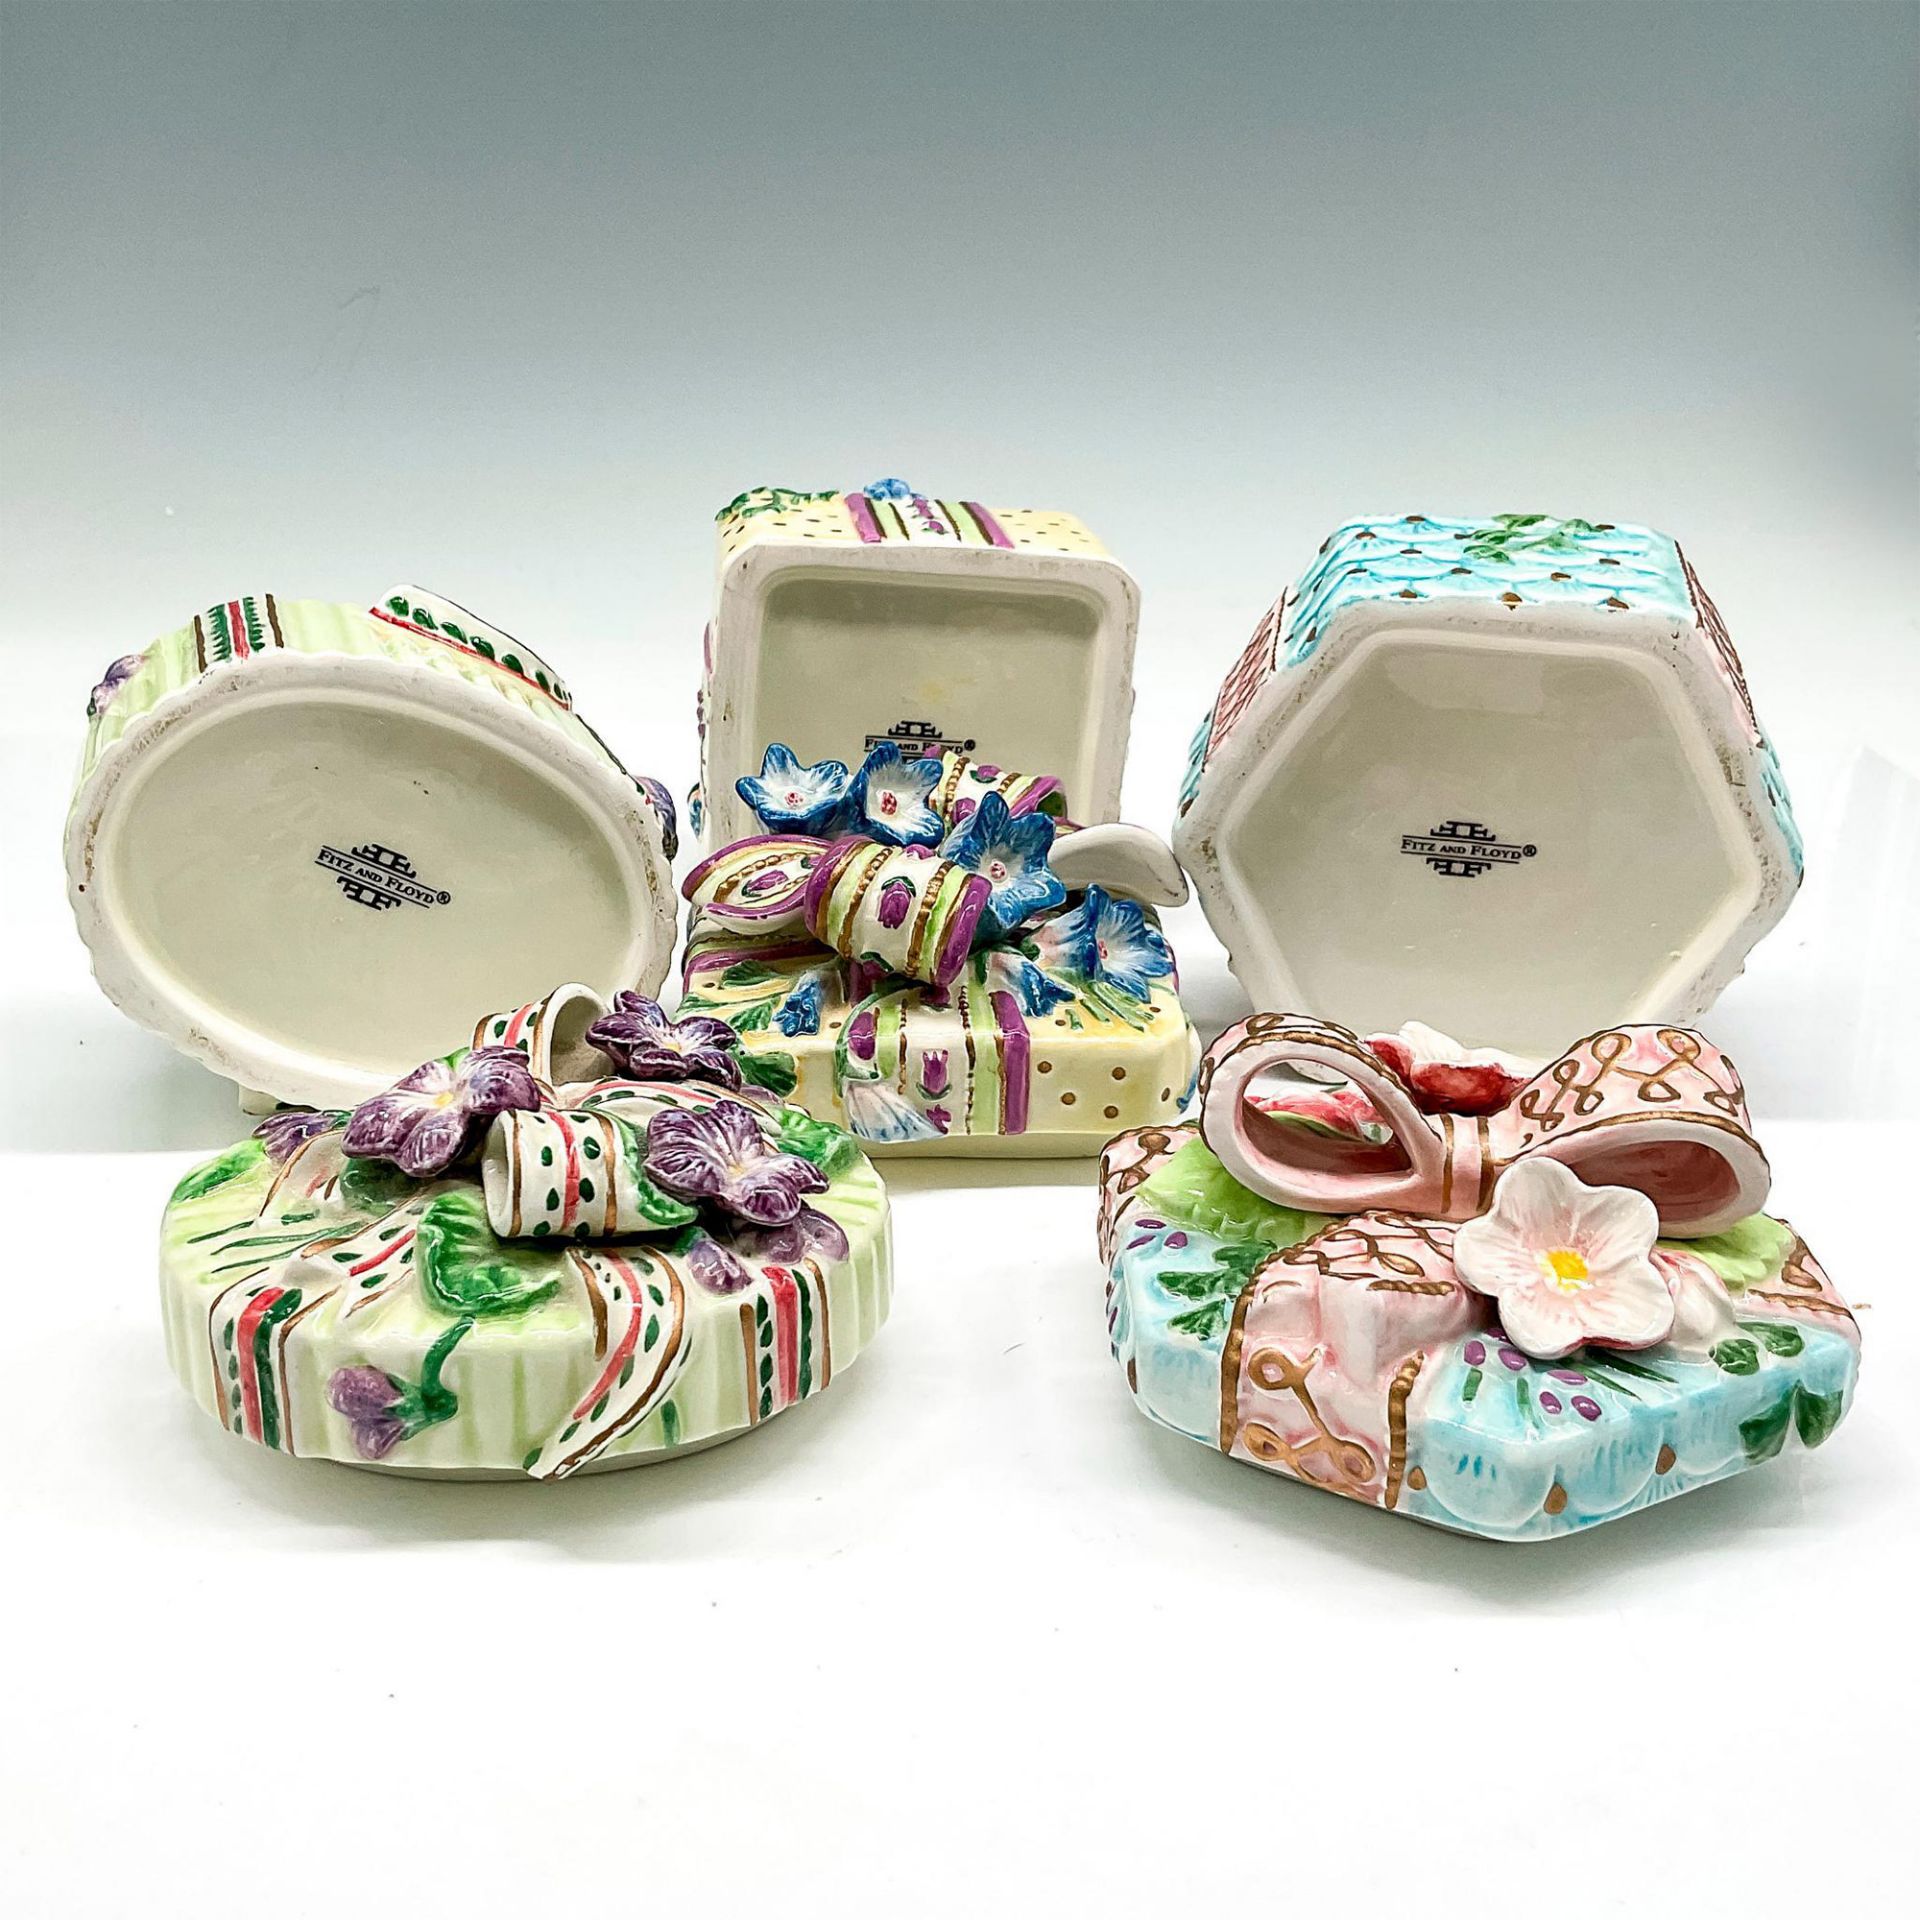 3pc Fitz & Floyd Ceramic Gift Trinket Boxes - Image 3 of 3